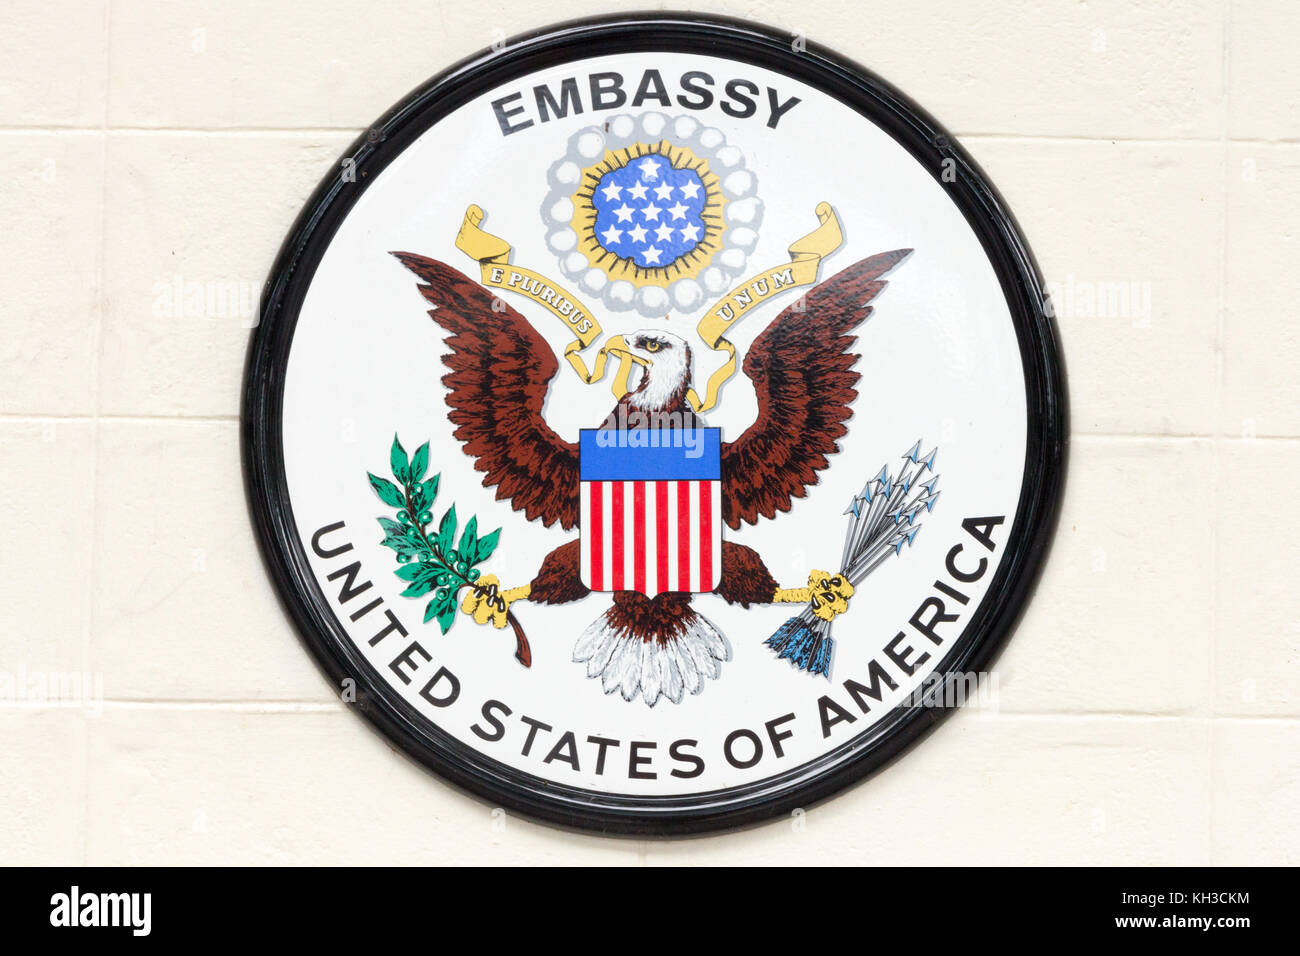 United States embassy sign Stock Photo